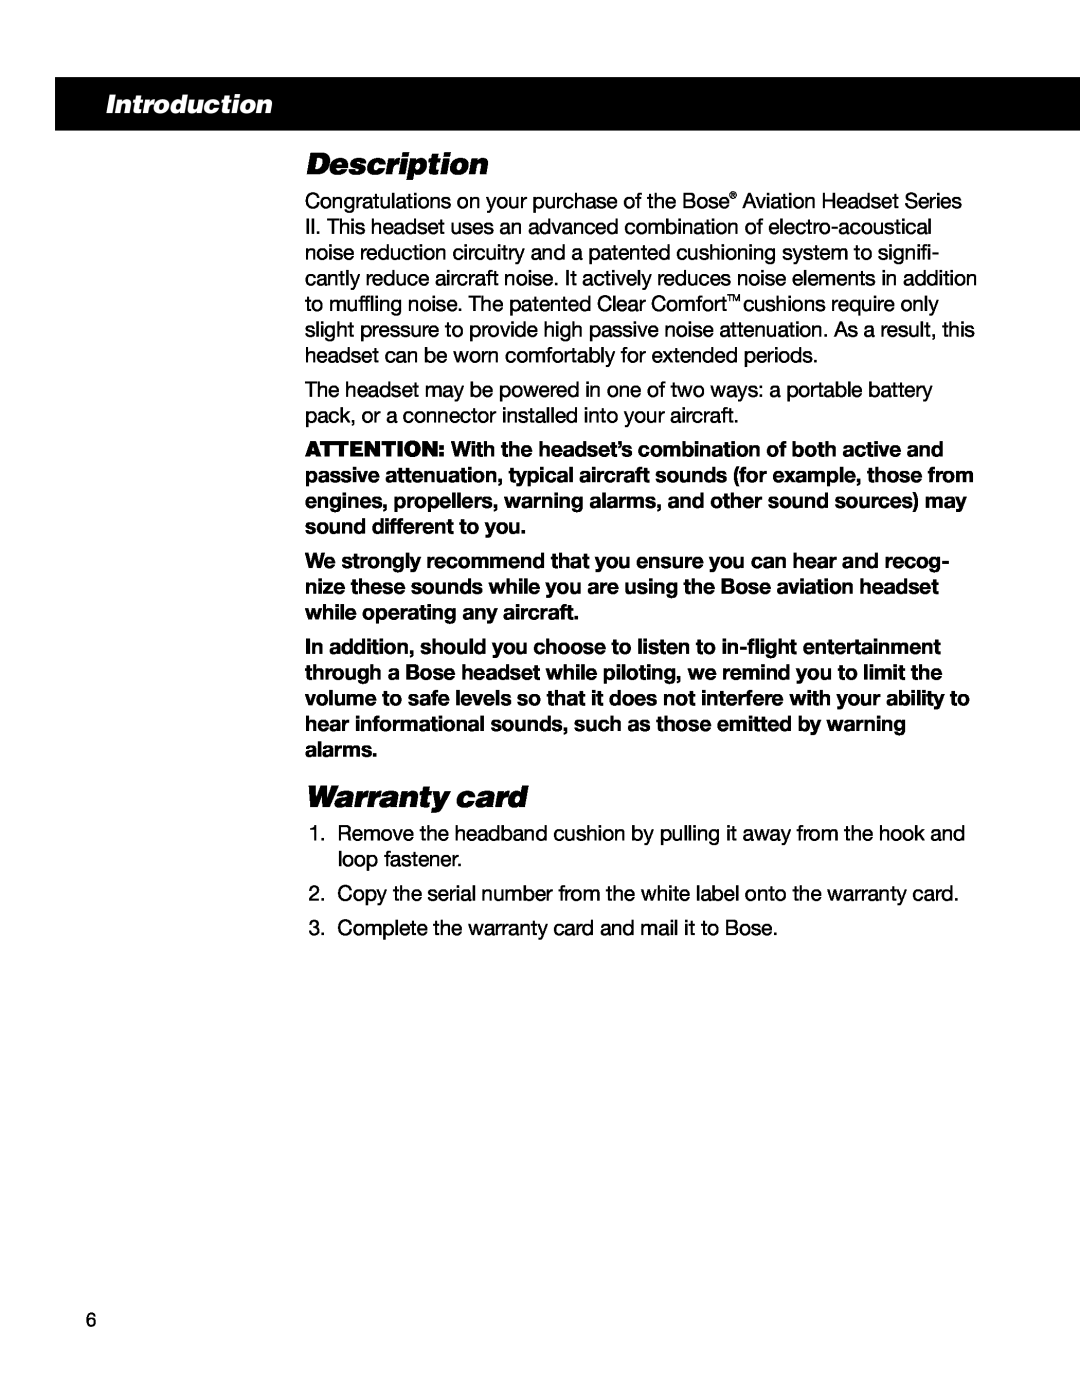 Bose II manual Description, Warranty card, Introduction 